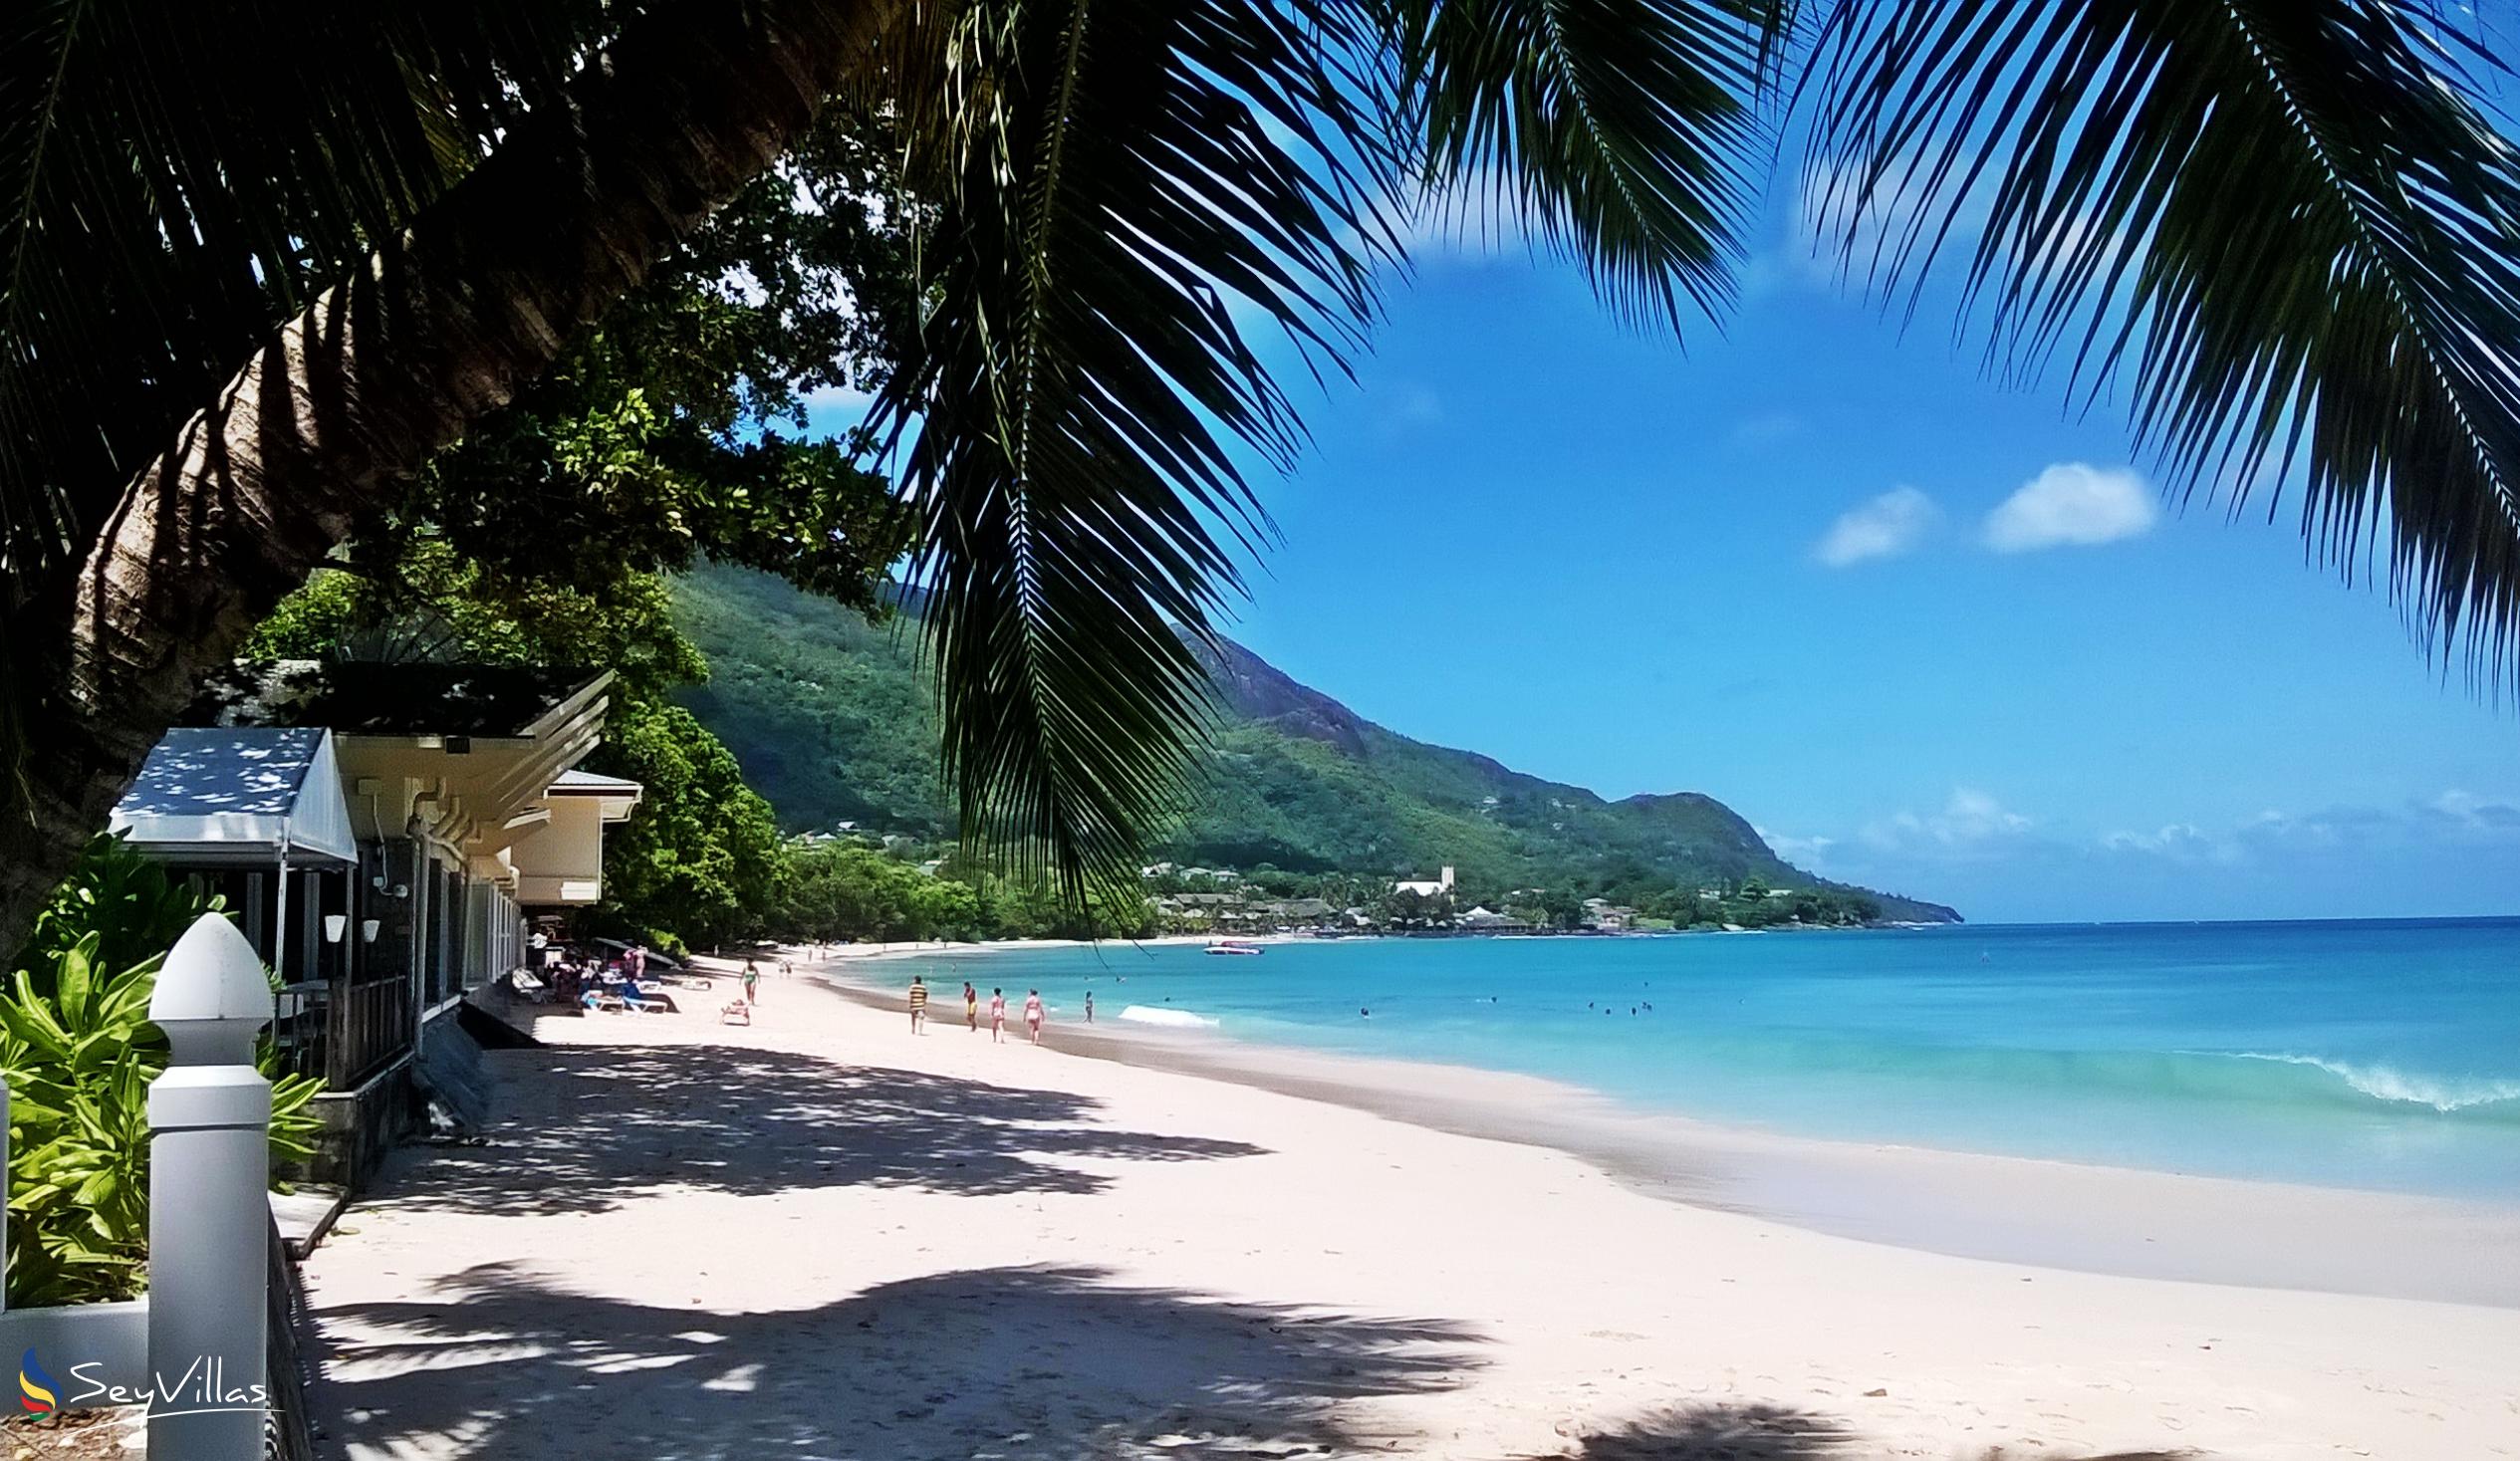 Photo 76: Coral Strand - Location - Mahé (Seychelles)